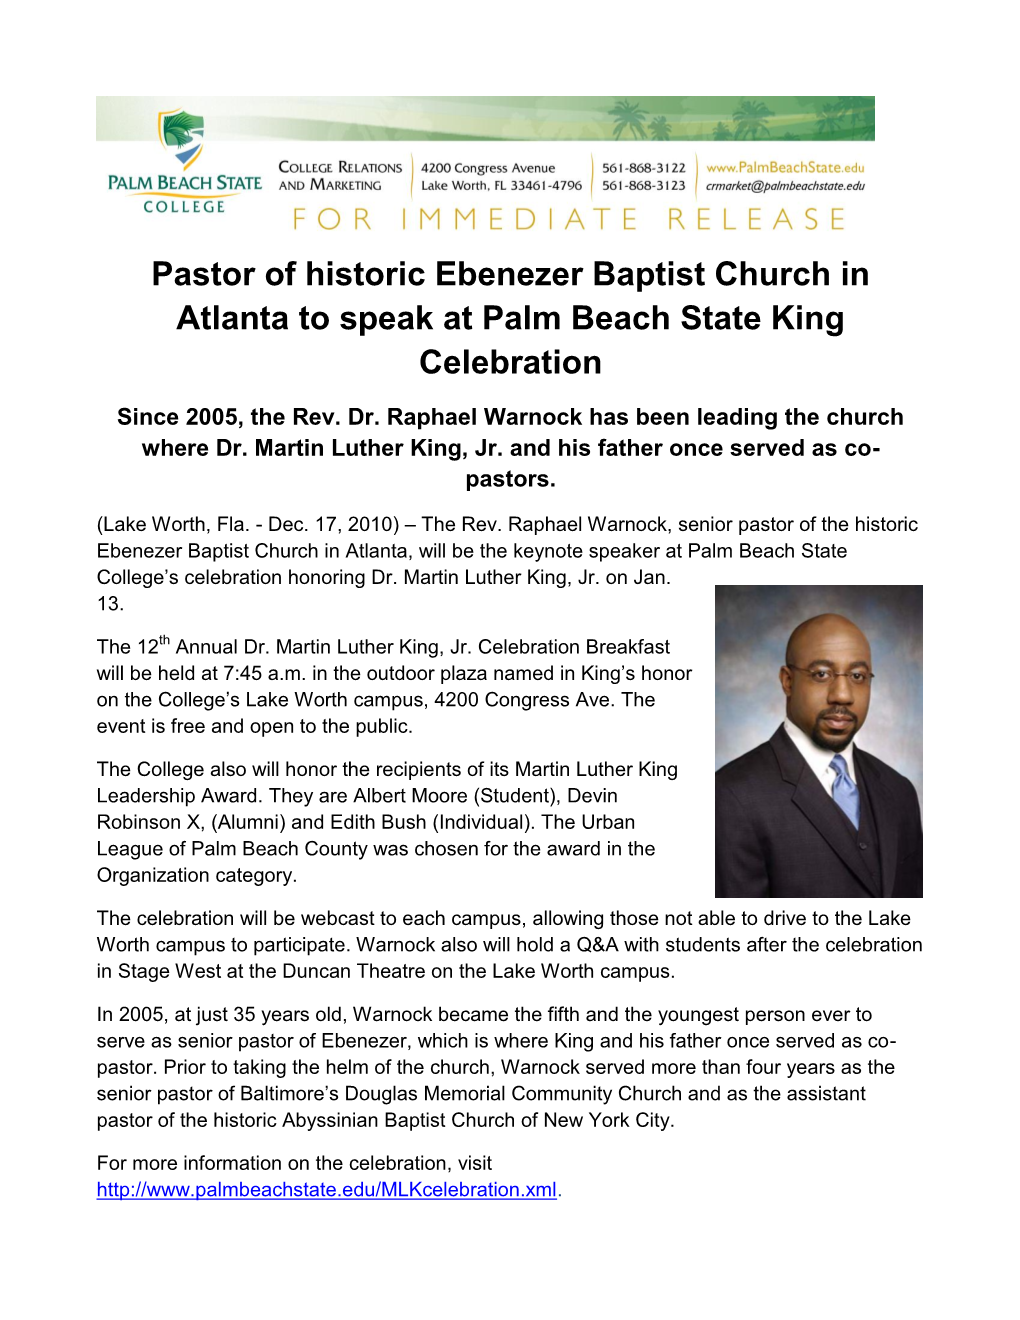 Pastor of Historic Ebenezer Baptist Church in Atlanta to Speak at Palm Beach State King Celebration